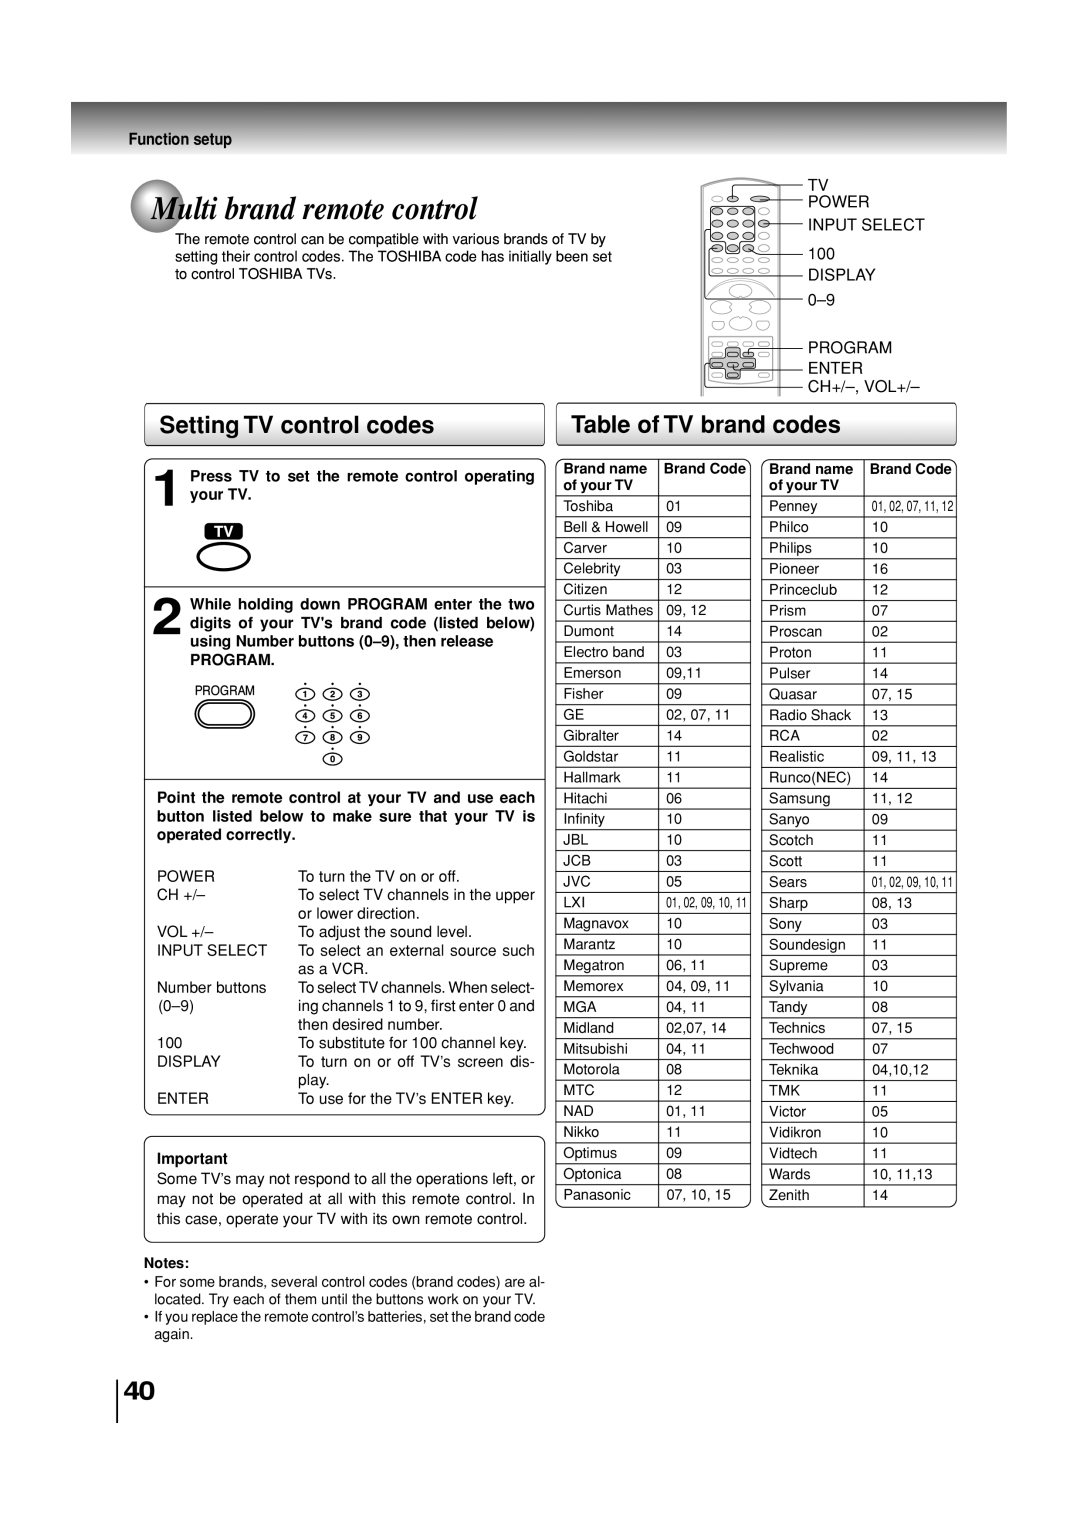 Toshiba SD-3860SC Multi brand remote control, Setting TV control codes, Table of TV brand codes, Function setup, Program 